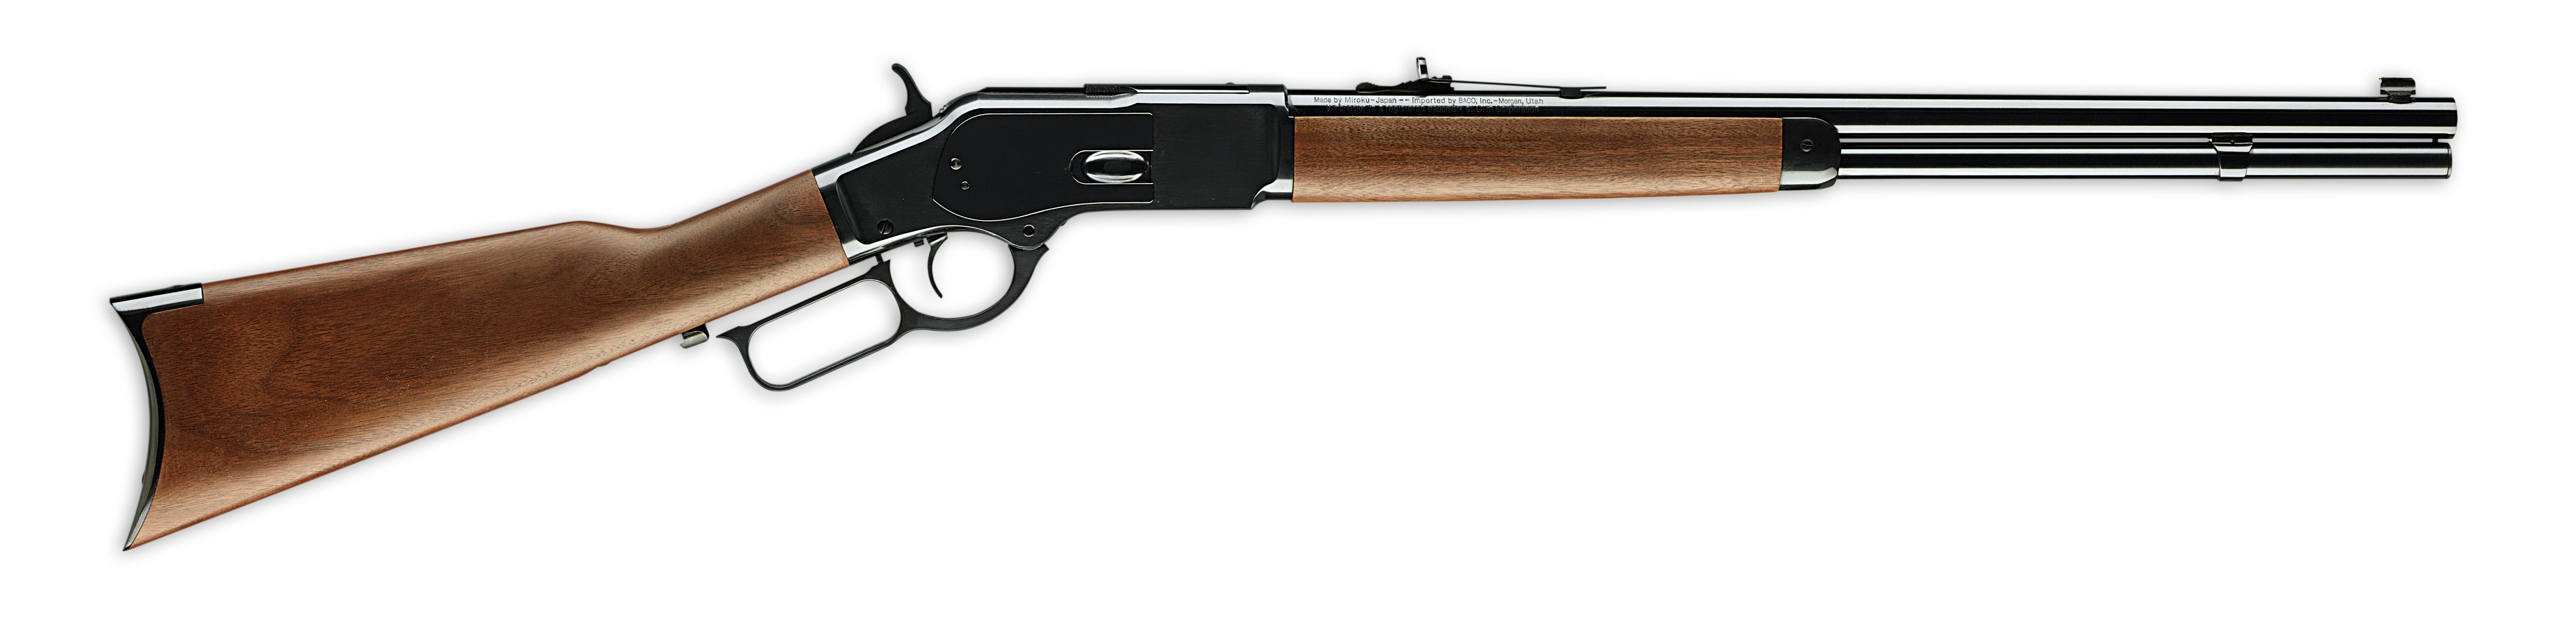 Model 1873, Lever-Action Rifles